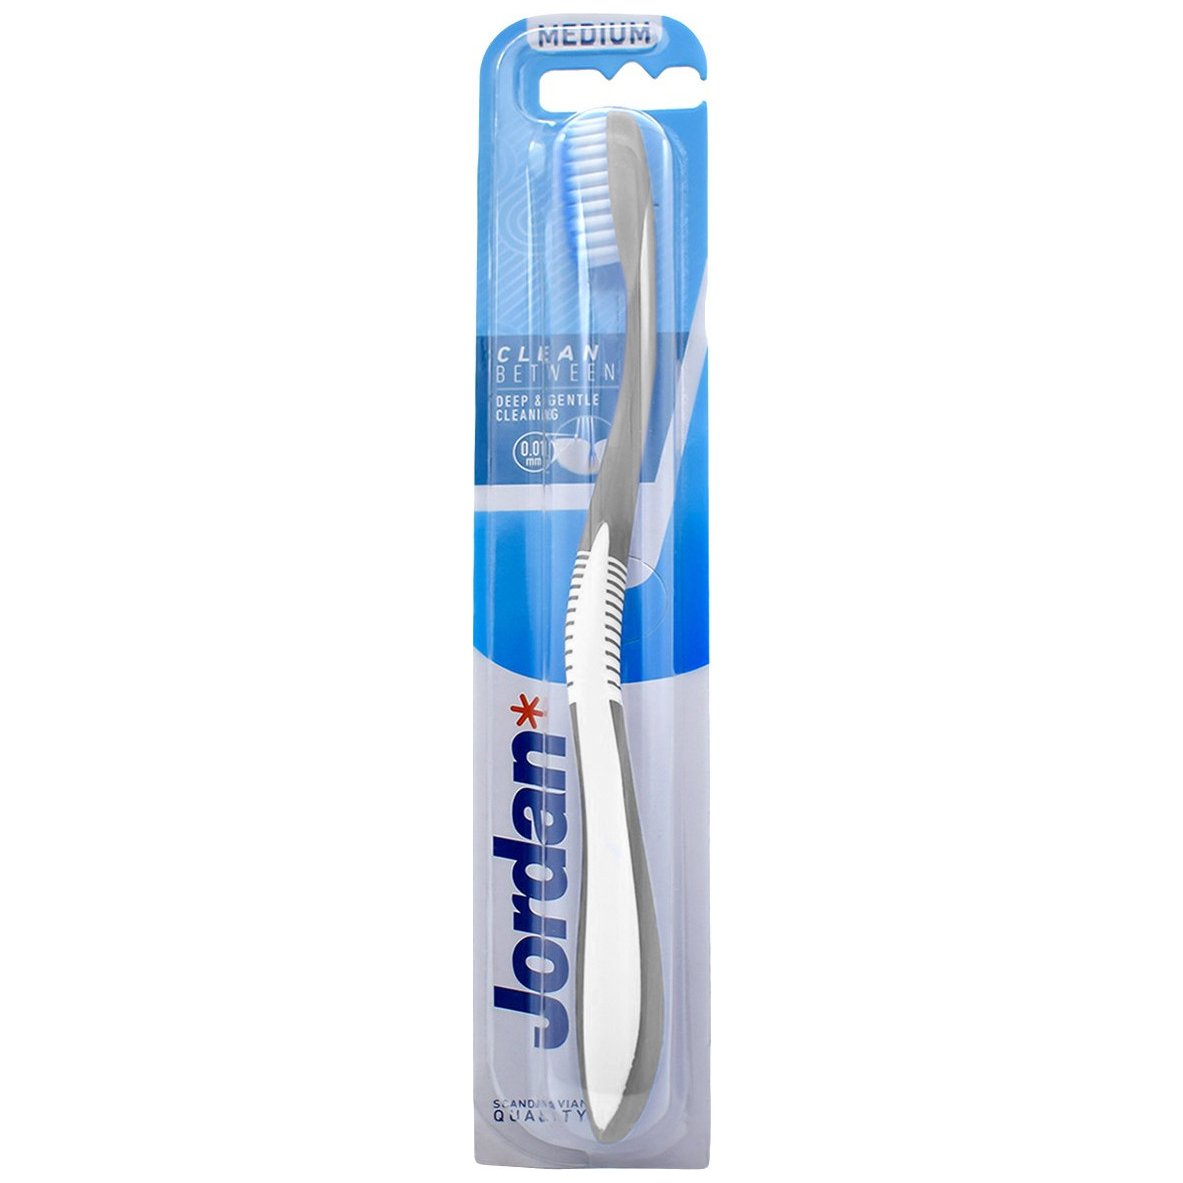 Jordan Clean Between Toothbrush Medium 0.01mm Μέτρια Οδοντόβουρτσα για Βαθύ Καθαρισμό με Εξαιρετικά Λεπτές Ίνες 1 Τεμάχιο, Κωδ 310035 – Γκρι